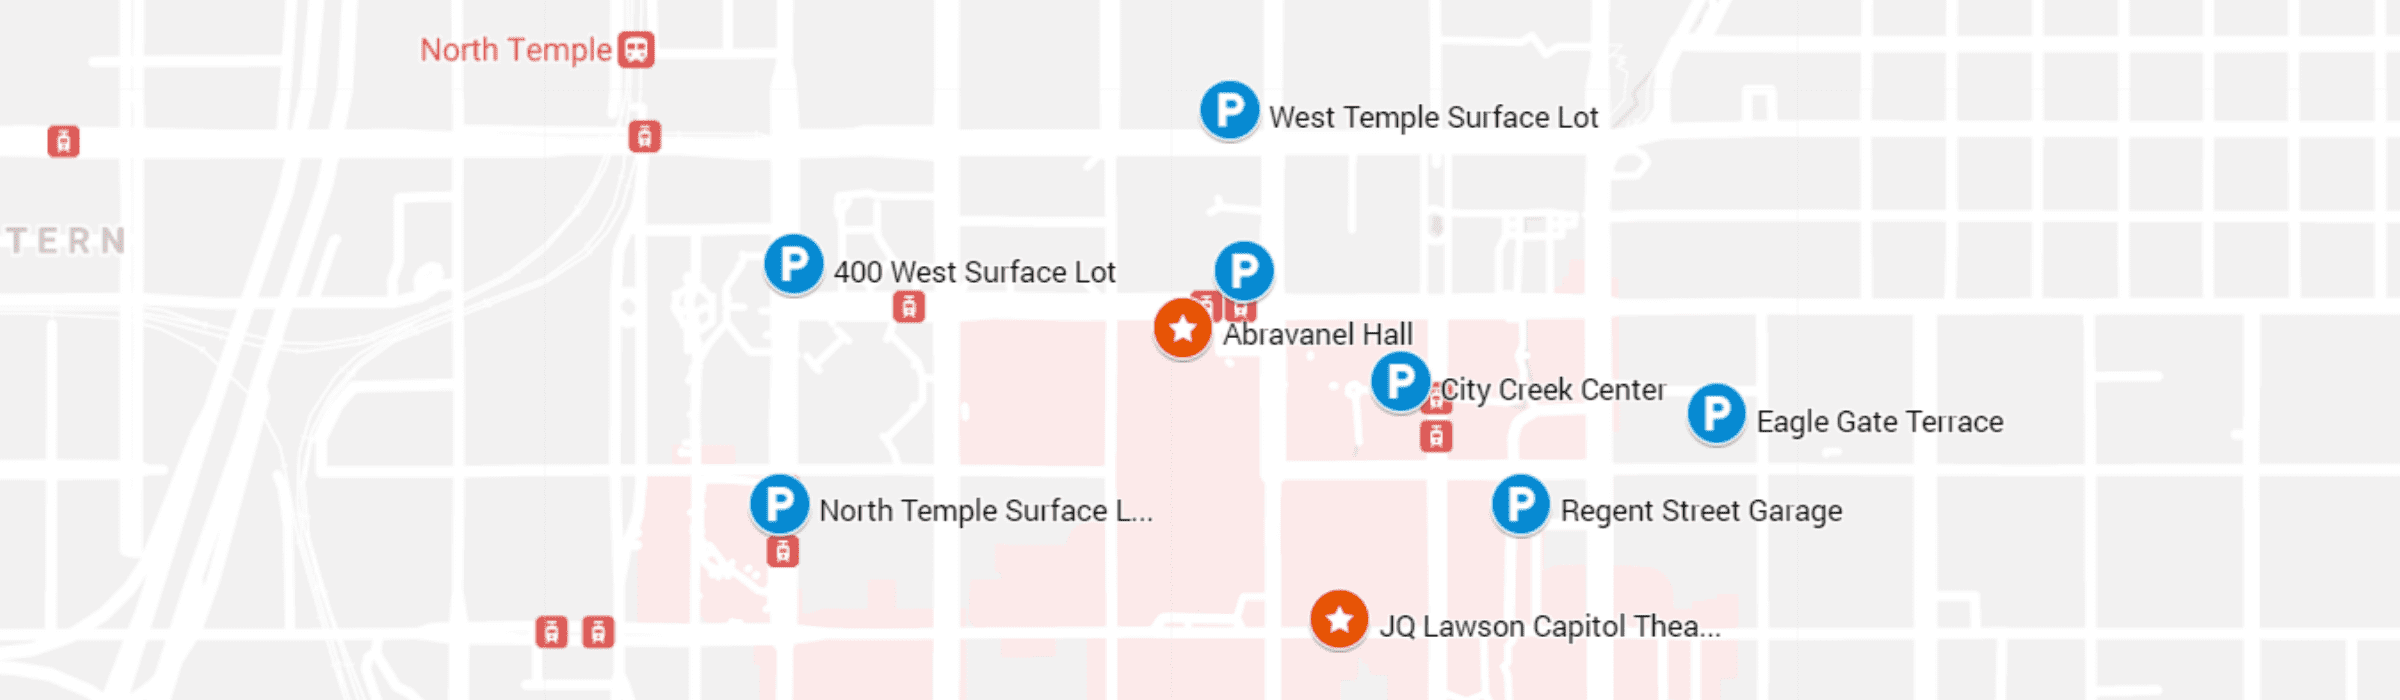 Salt Lake City Parking Map